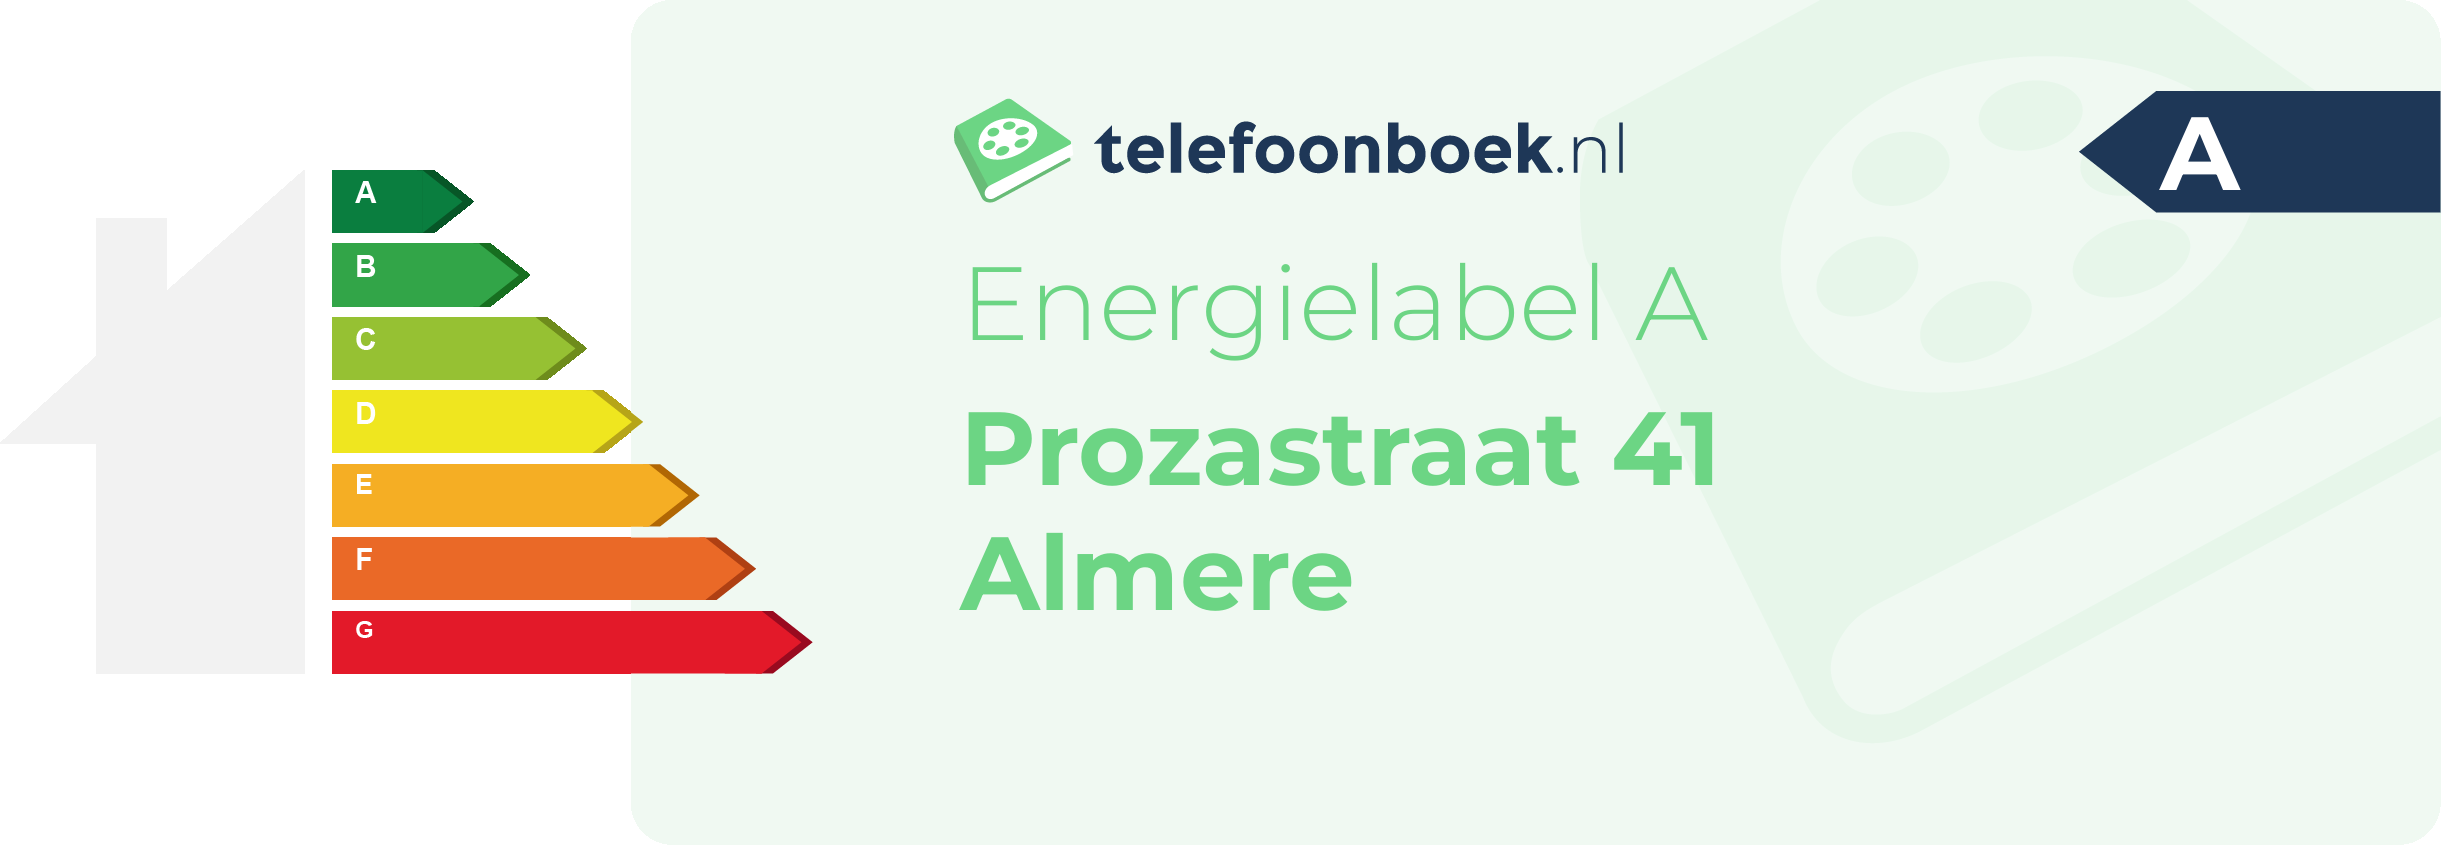 Energielabel Prozastraat 41 Almere